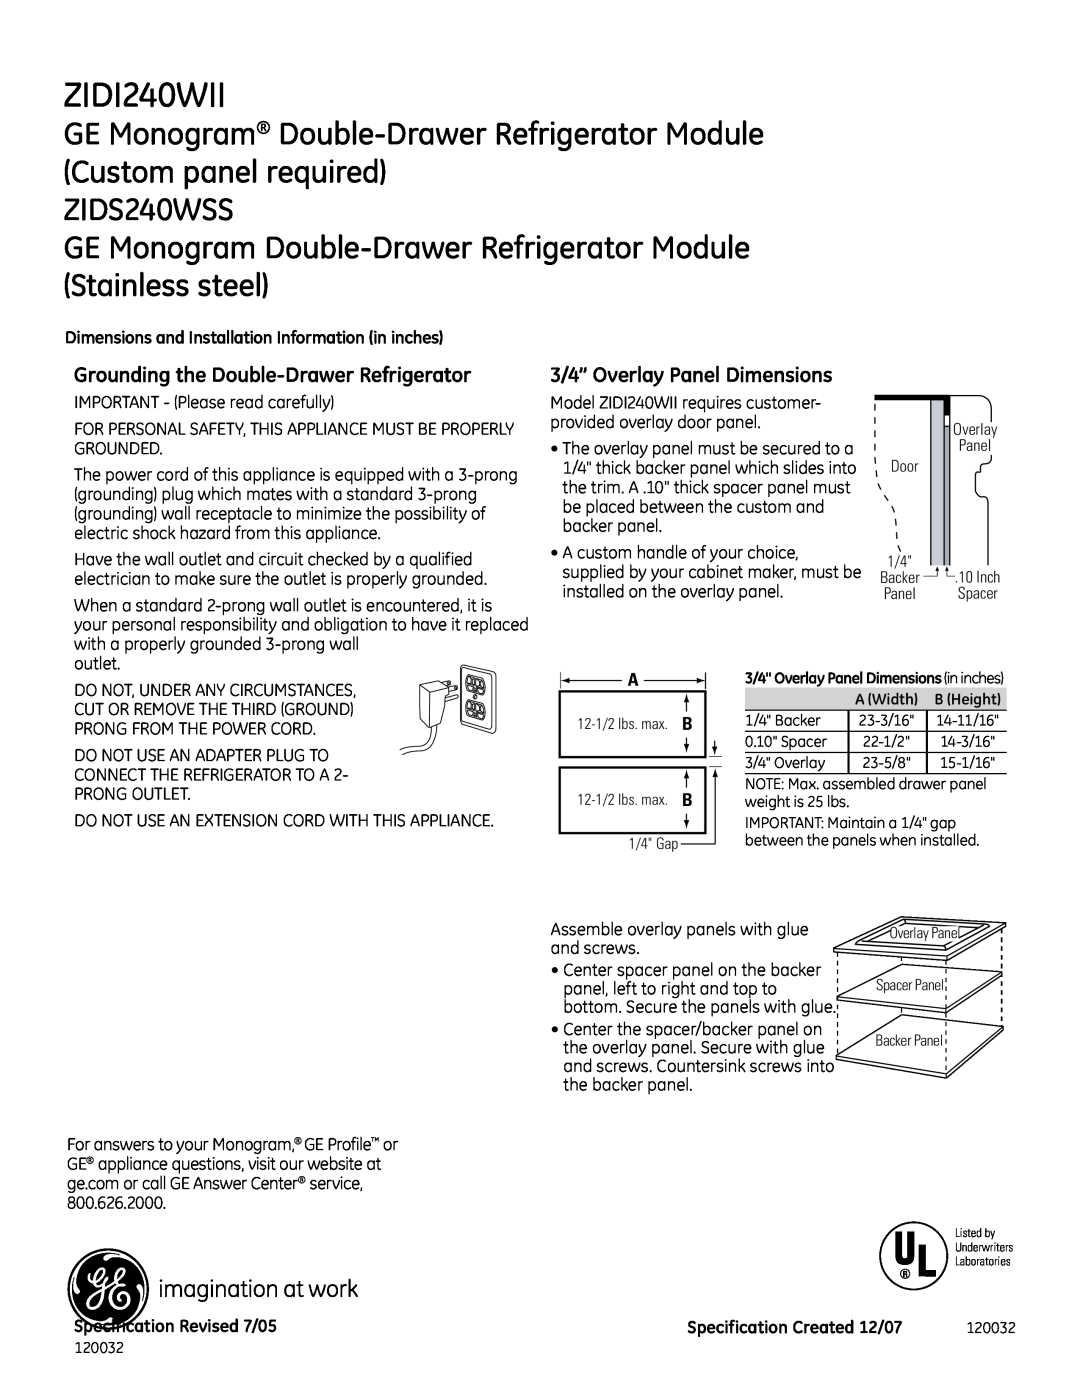 GE Monogram ZIDI240WII dimensions GE Monogram Double-Drawer Refrigerator Module Custom panel required, ZIDS240WSS 